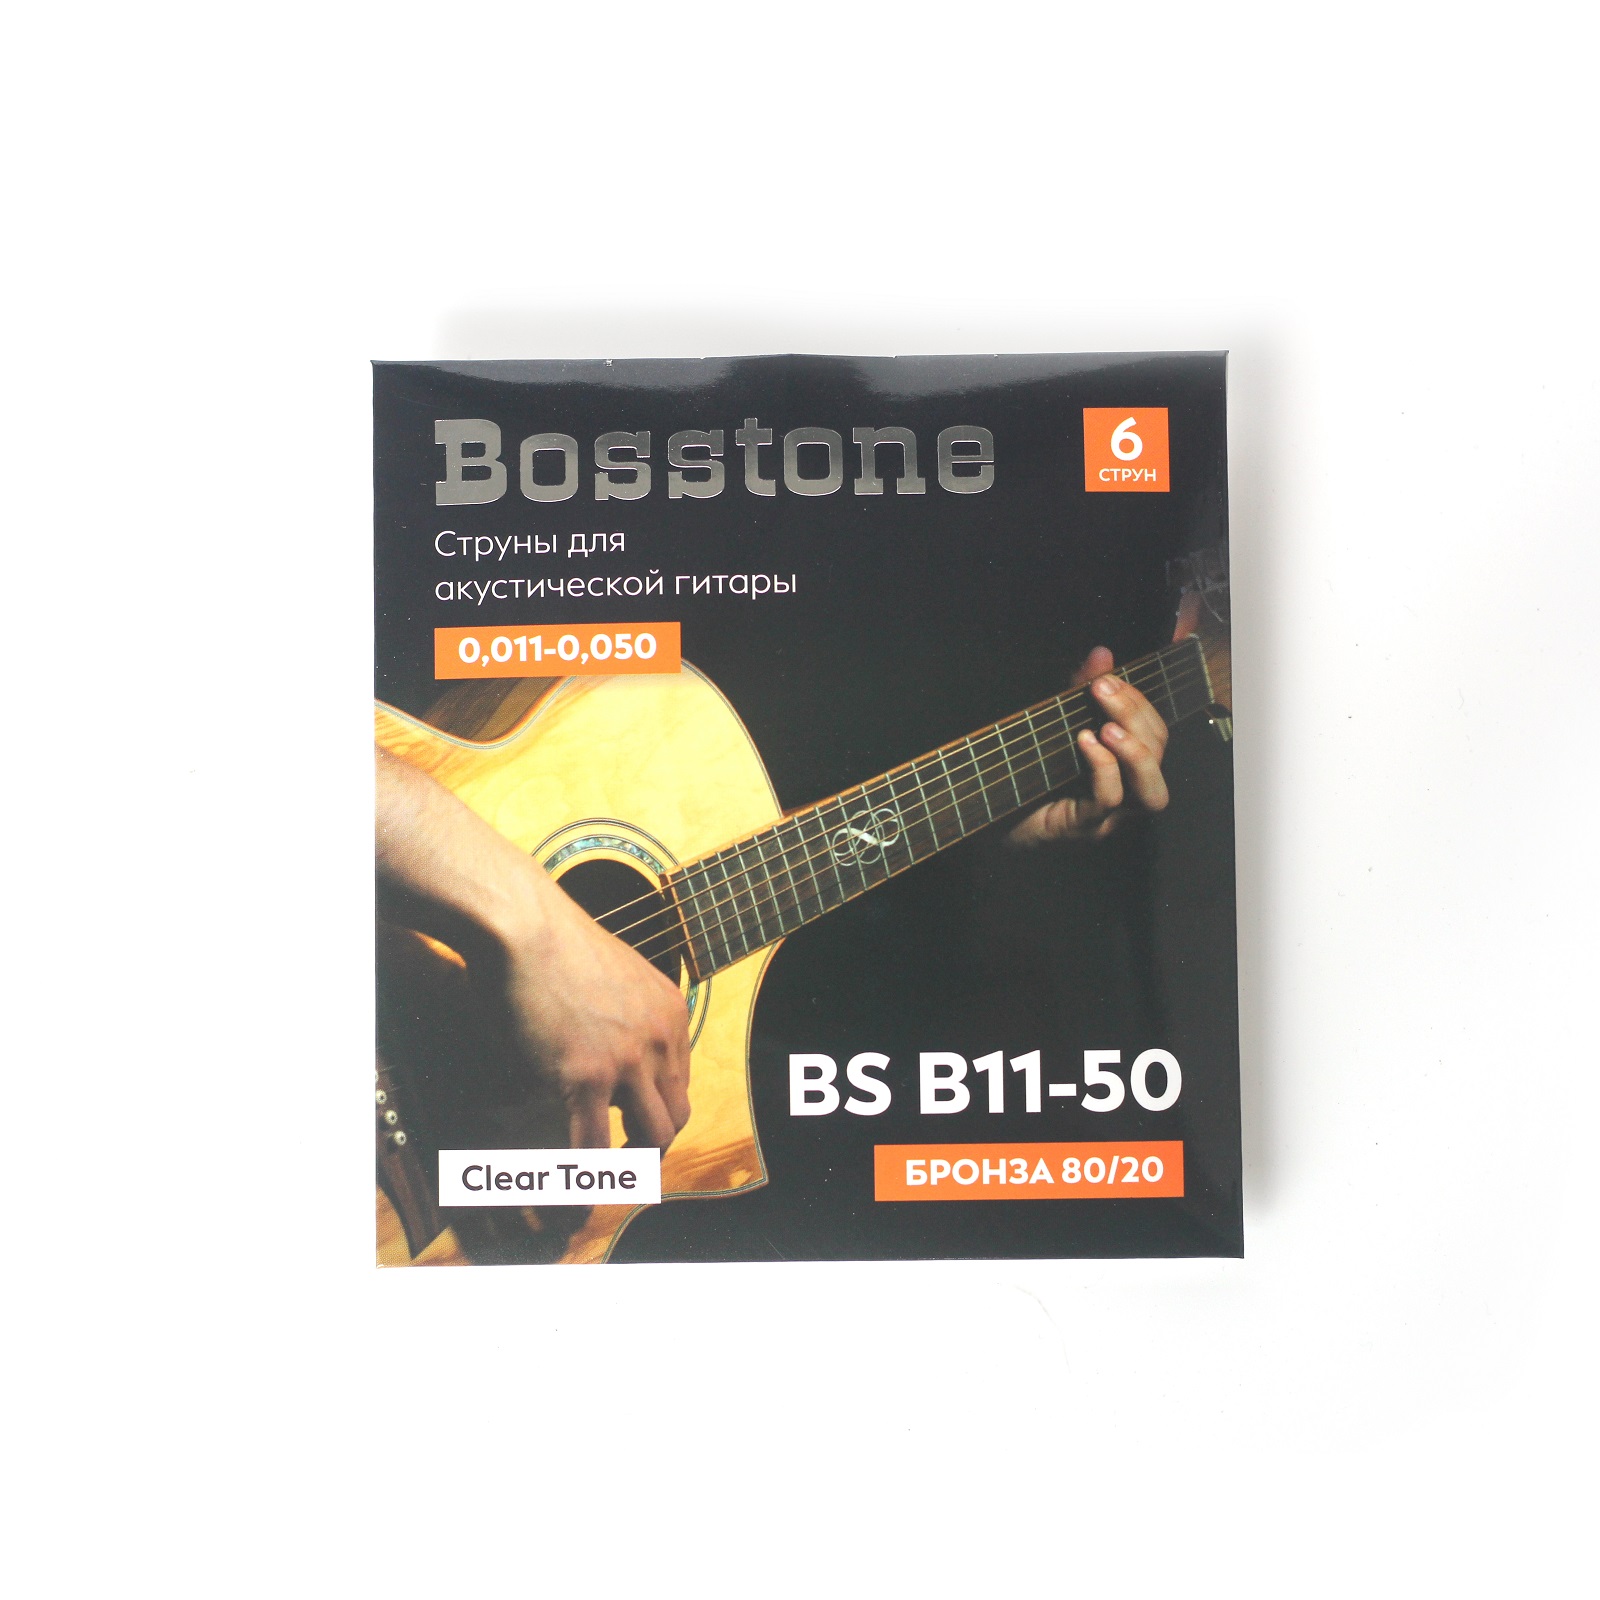 Bosstone Clear Tone BS B11-50  Струны для акустической гитары бронза 80/20 